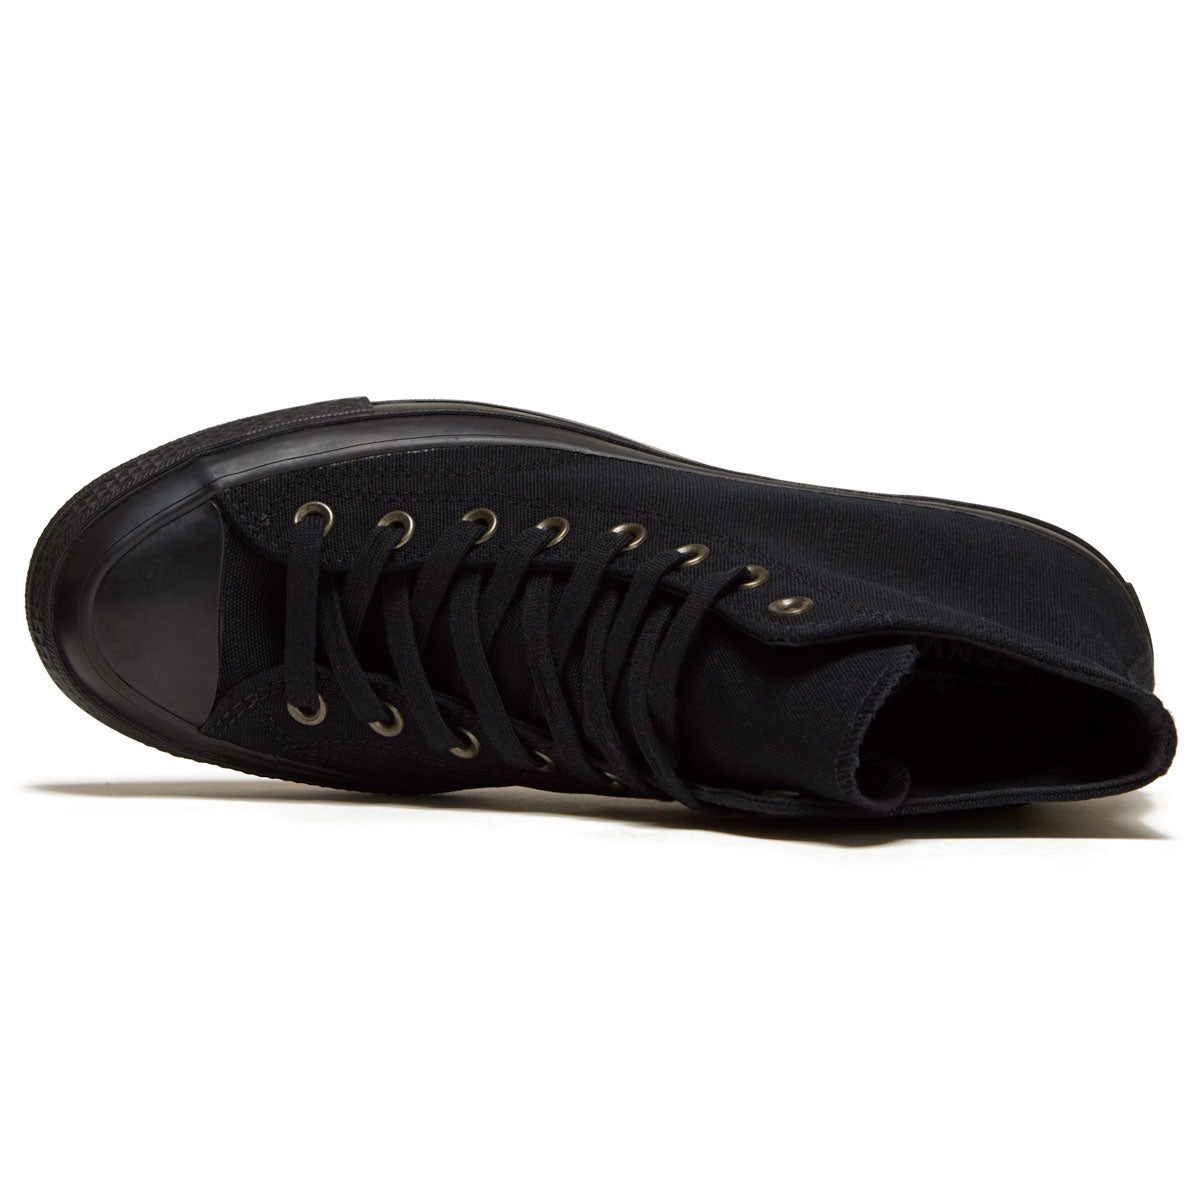 Converse Chuck 70 Vintage Hi Shoes - Black/Almost Black/Black image 3